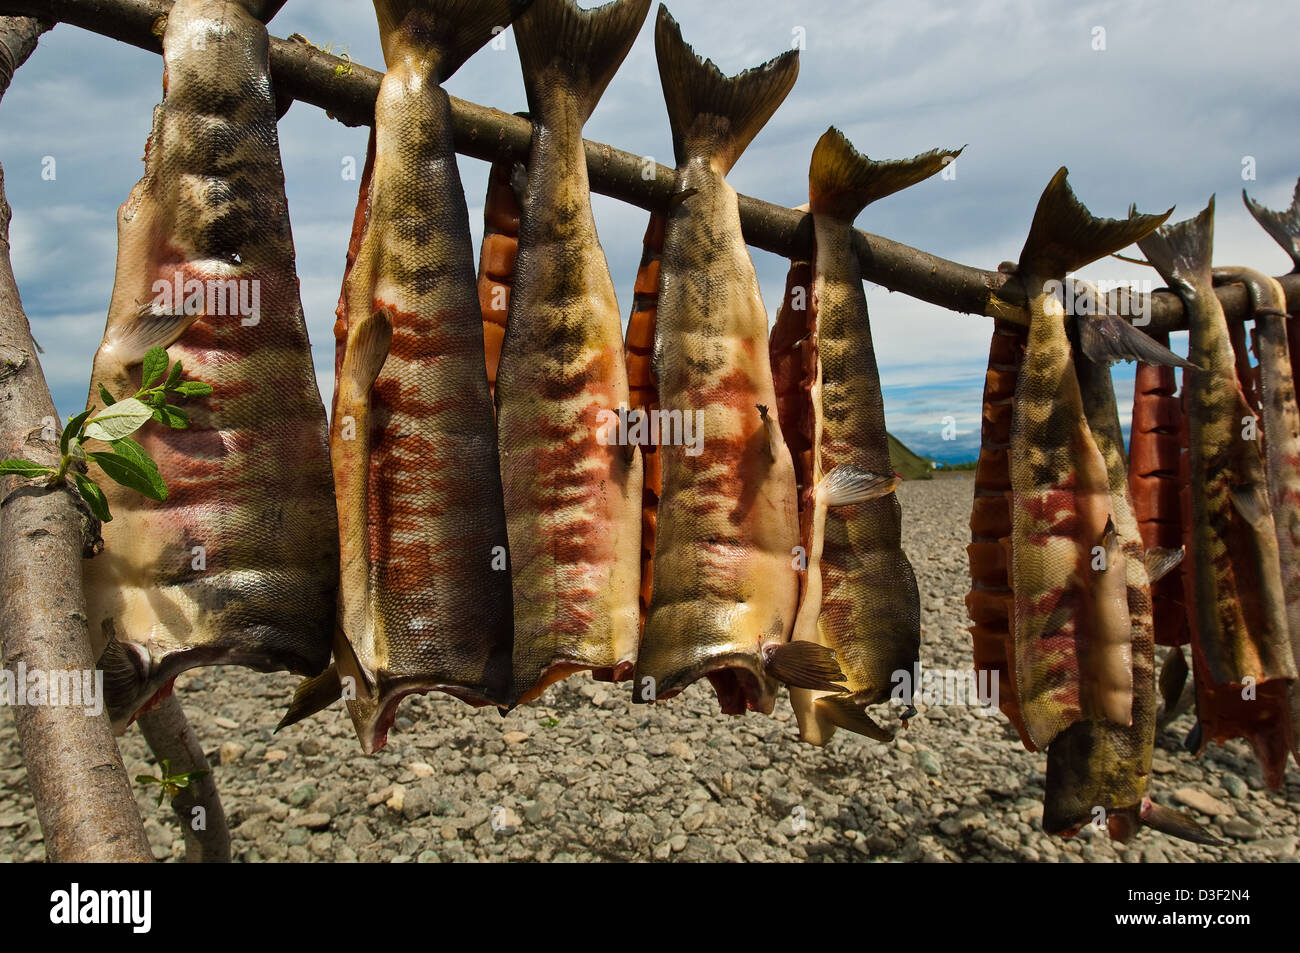 https://c8.alamy.com/comp/D3F2N4/chum-salmon-oncorhynchus-keta-fillets-drying-on-a-rack-near-a-native-D3F2N4.jpg